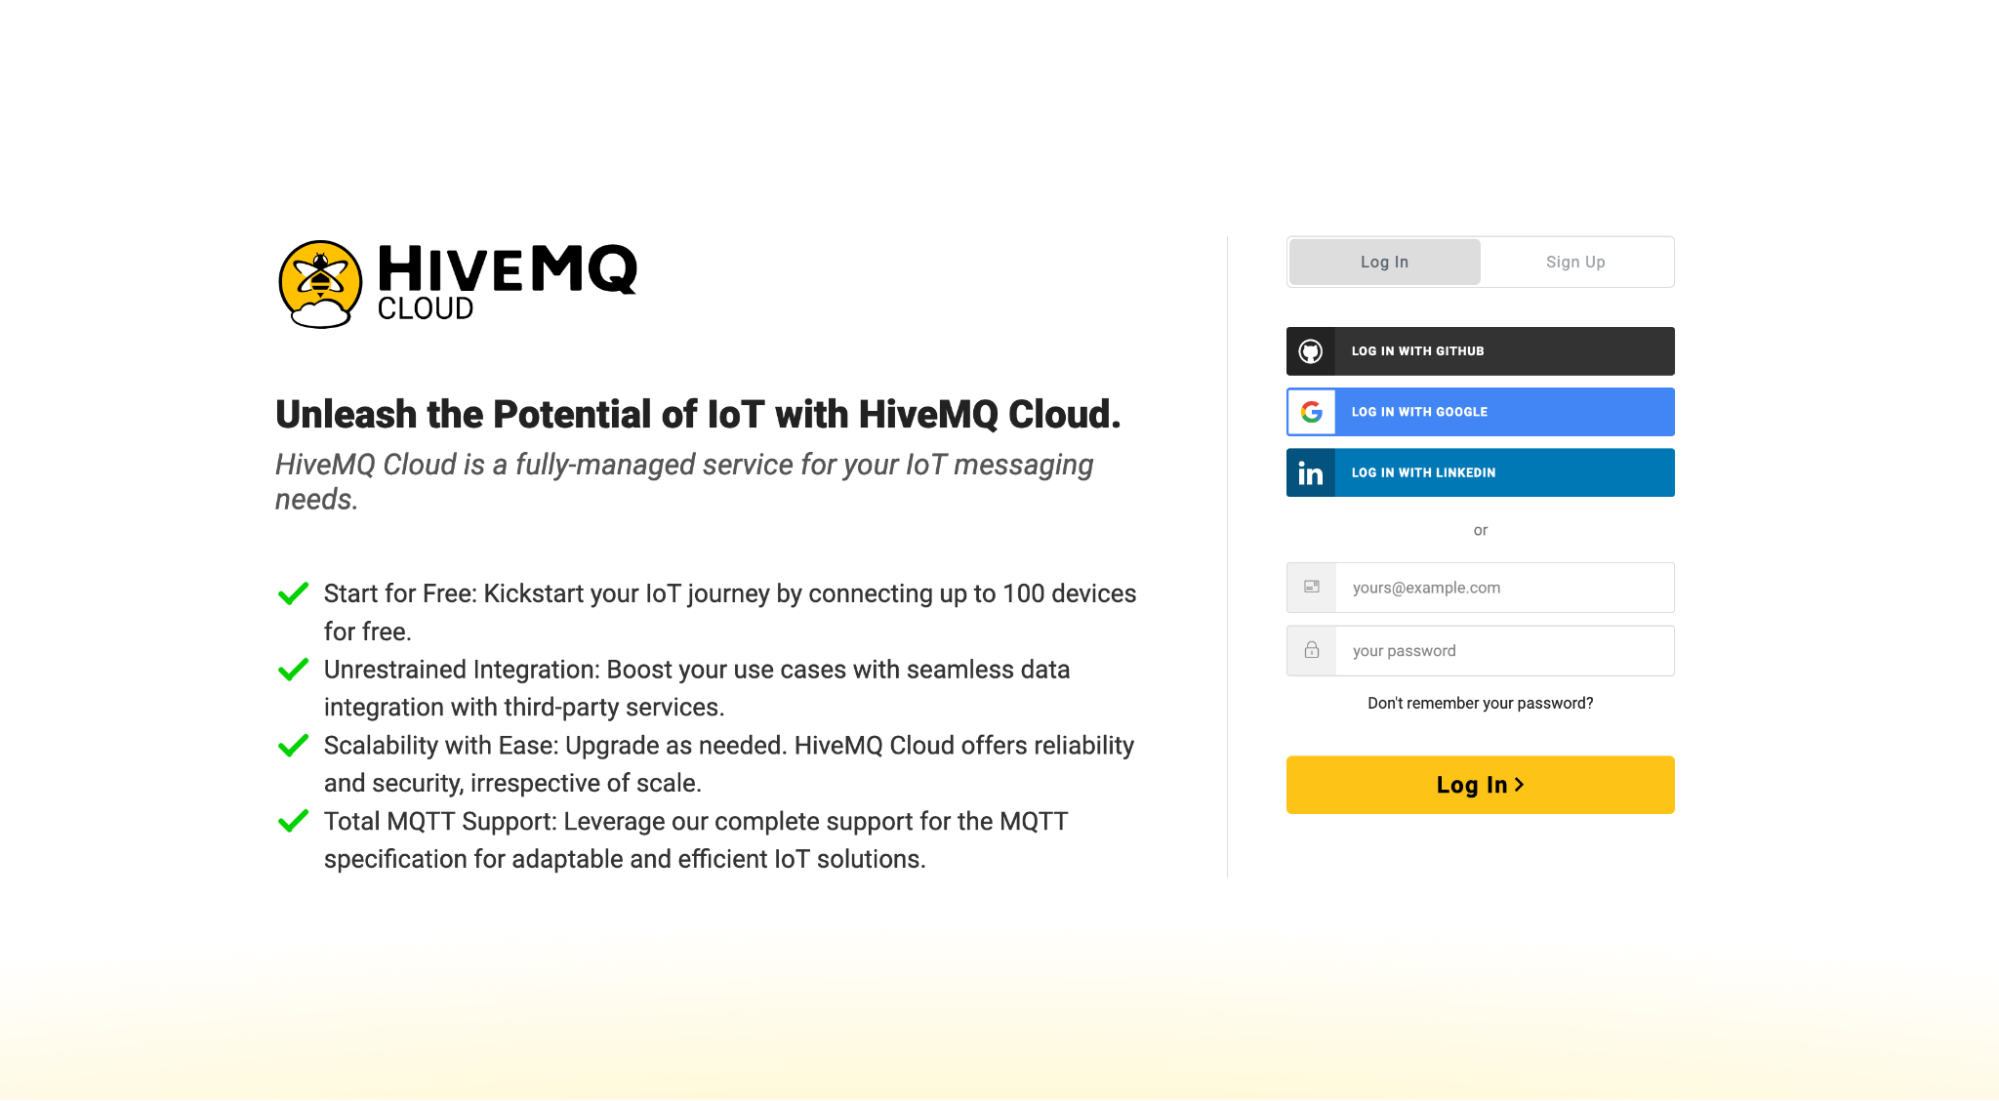 Logging into HiveMQ Cloud